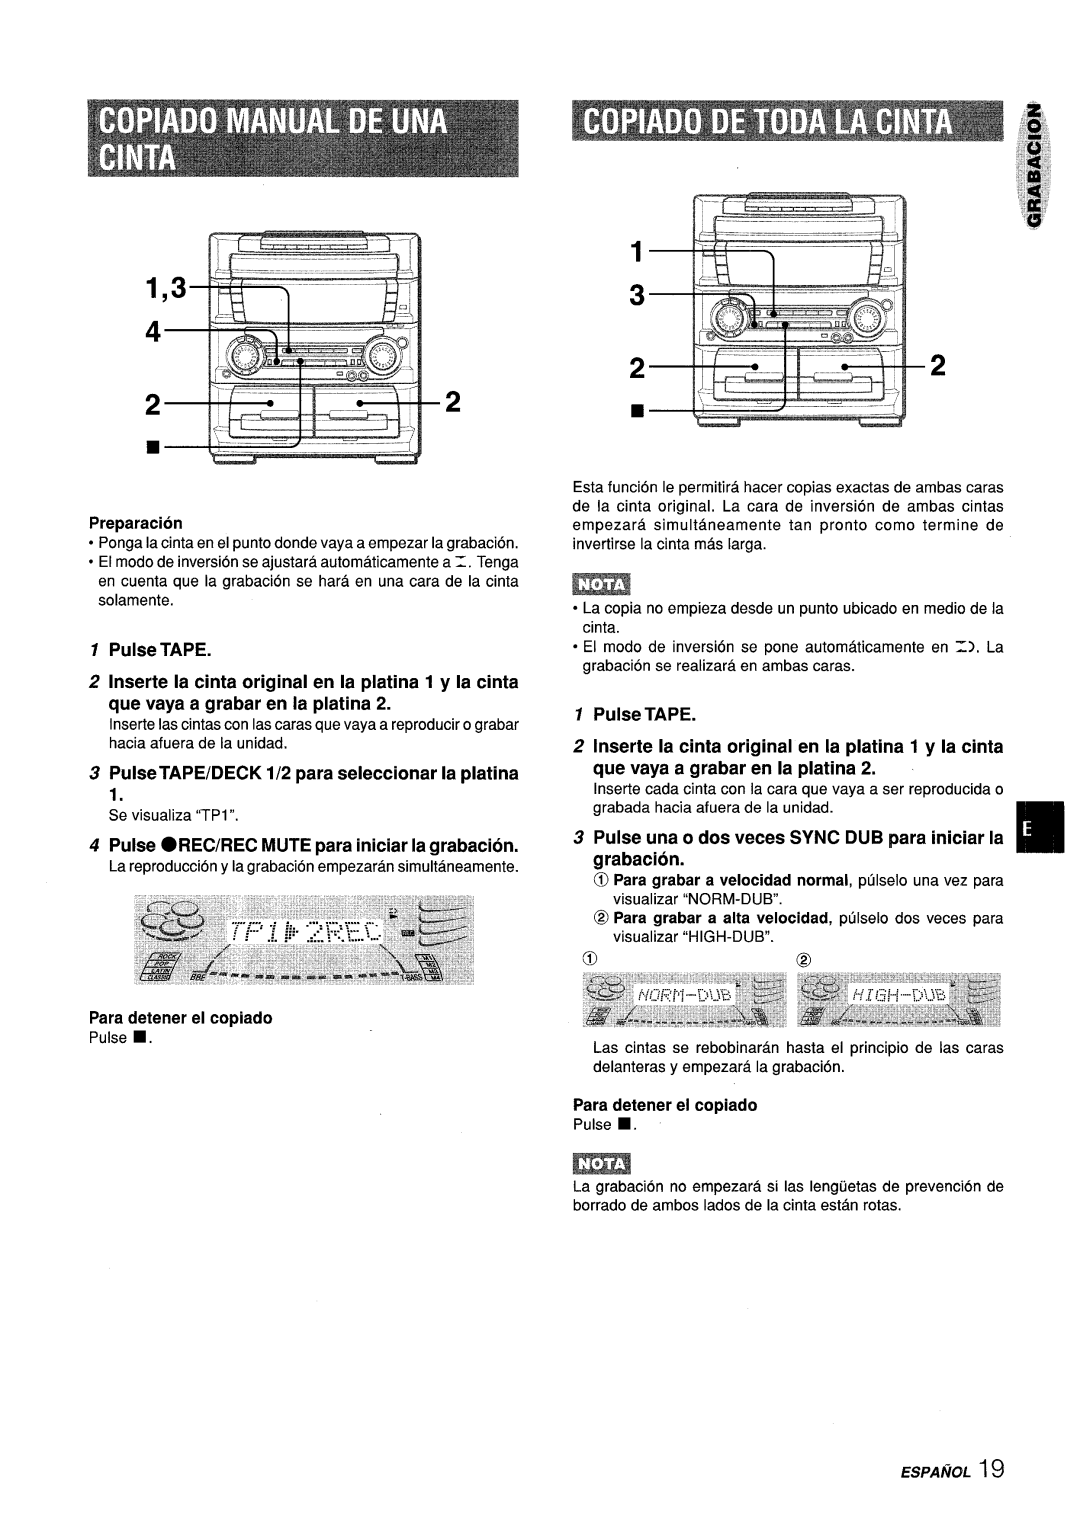 Aiwa Z-L70 manual Preparation, Pulse TAPE/DECK 1/2 para seleccionar la platina, v”zl, Para detener el copiado 